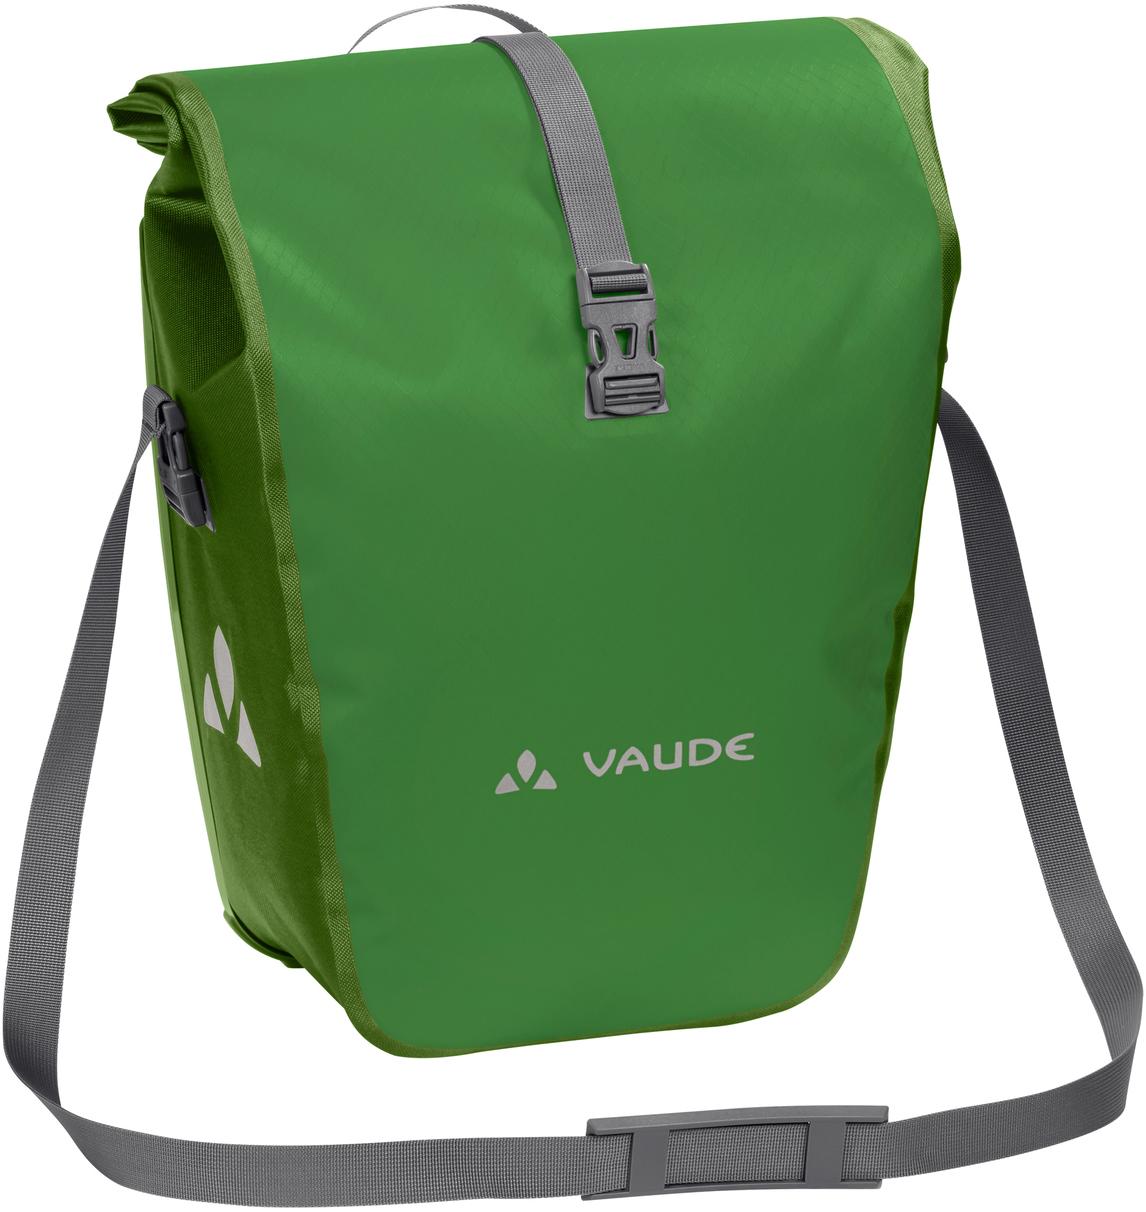 Vaude Aqua Rear Pannier Bags (pair) - Parrot Green